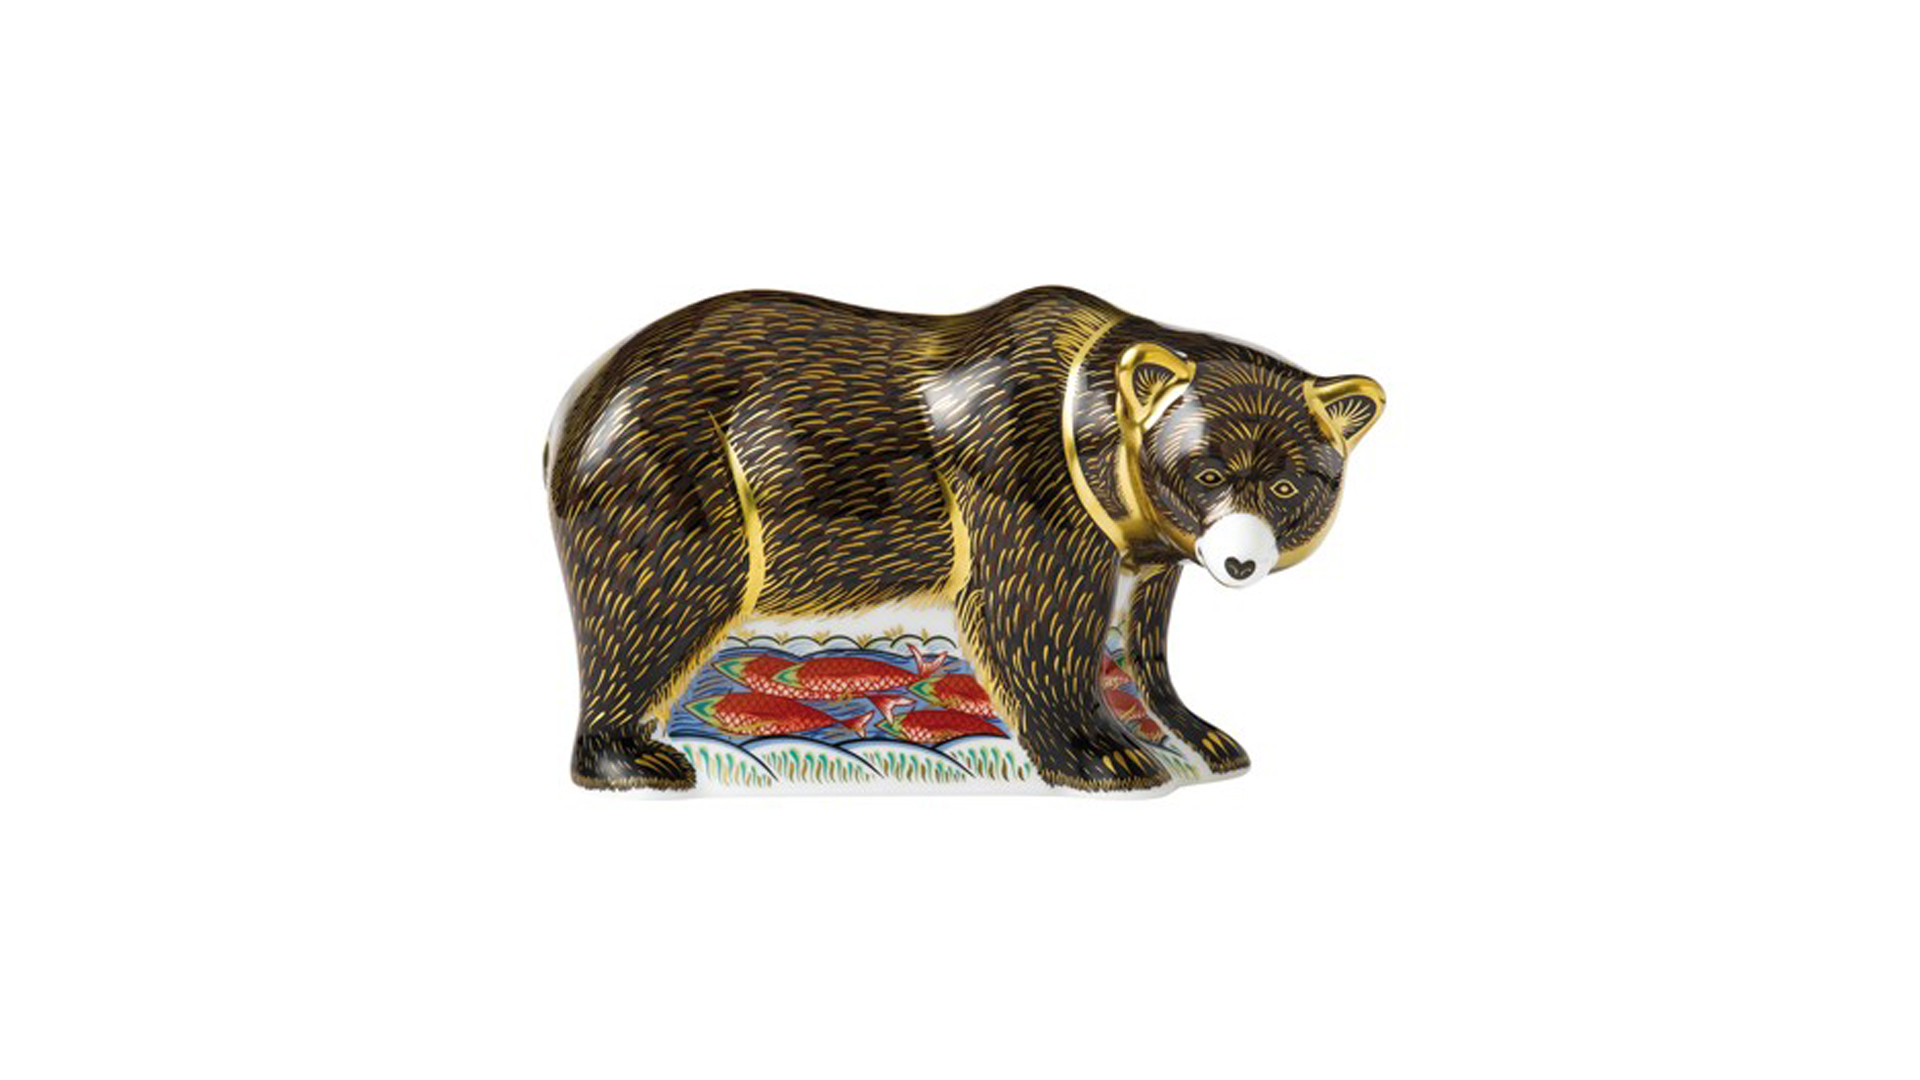 Пресс-папье Royal Crown Derby Медведь Гризли 16 см